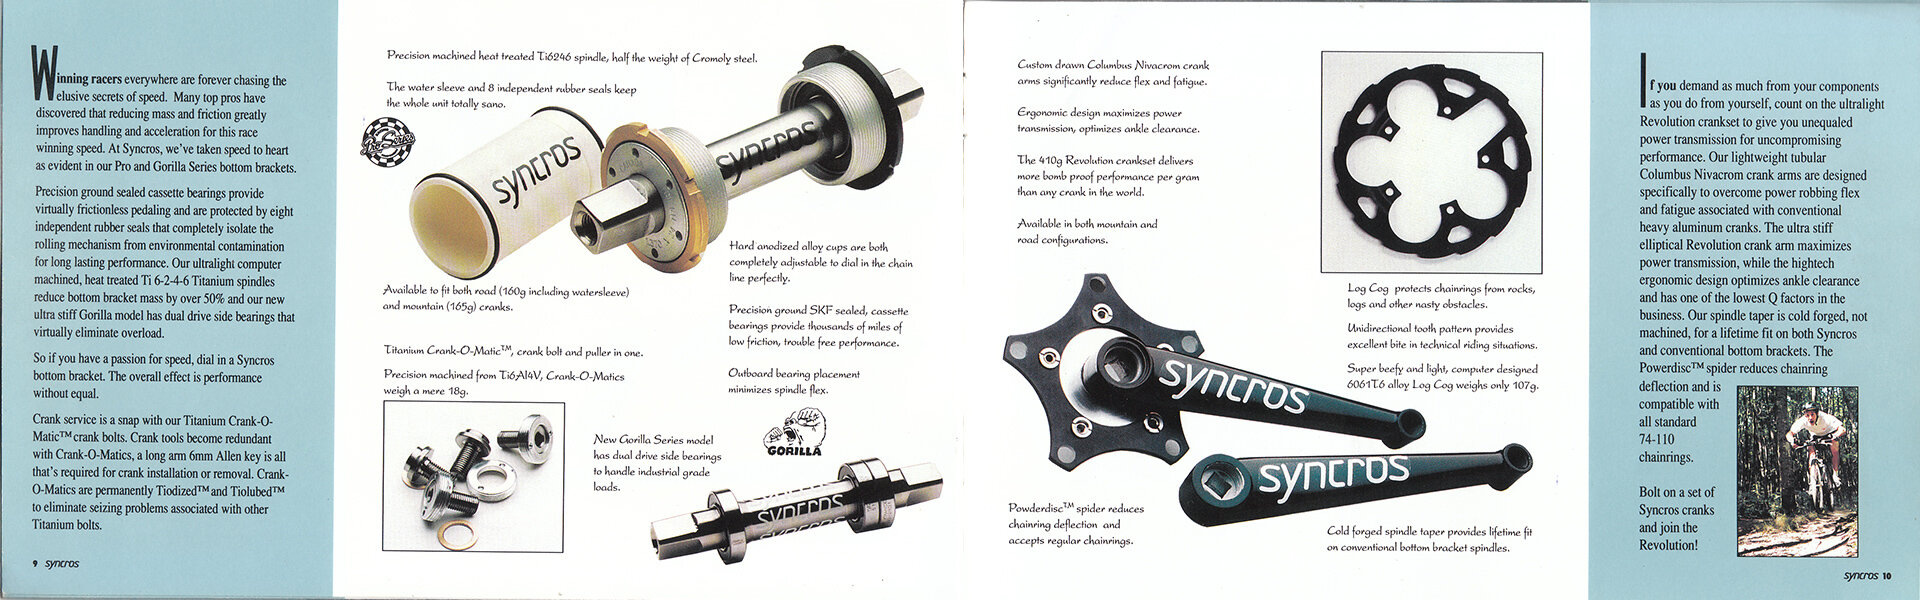 syncros-1993-catalogue-page-9-10.jpg